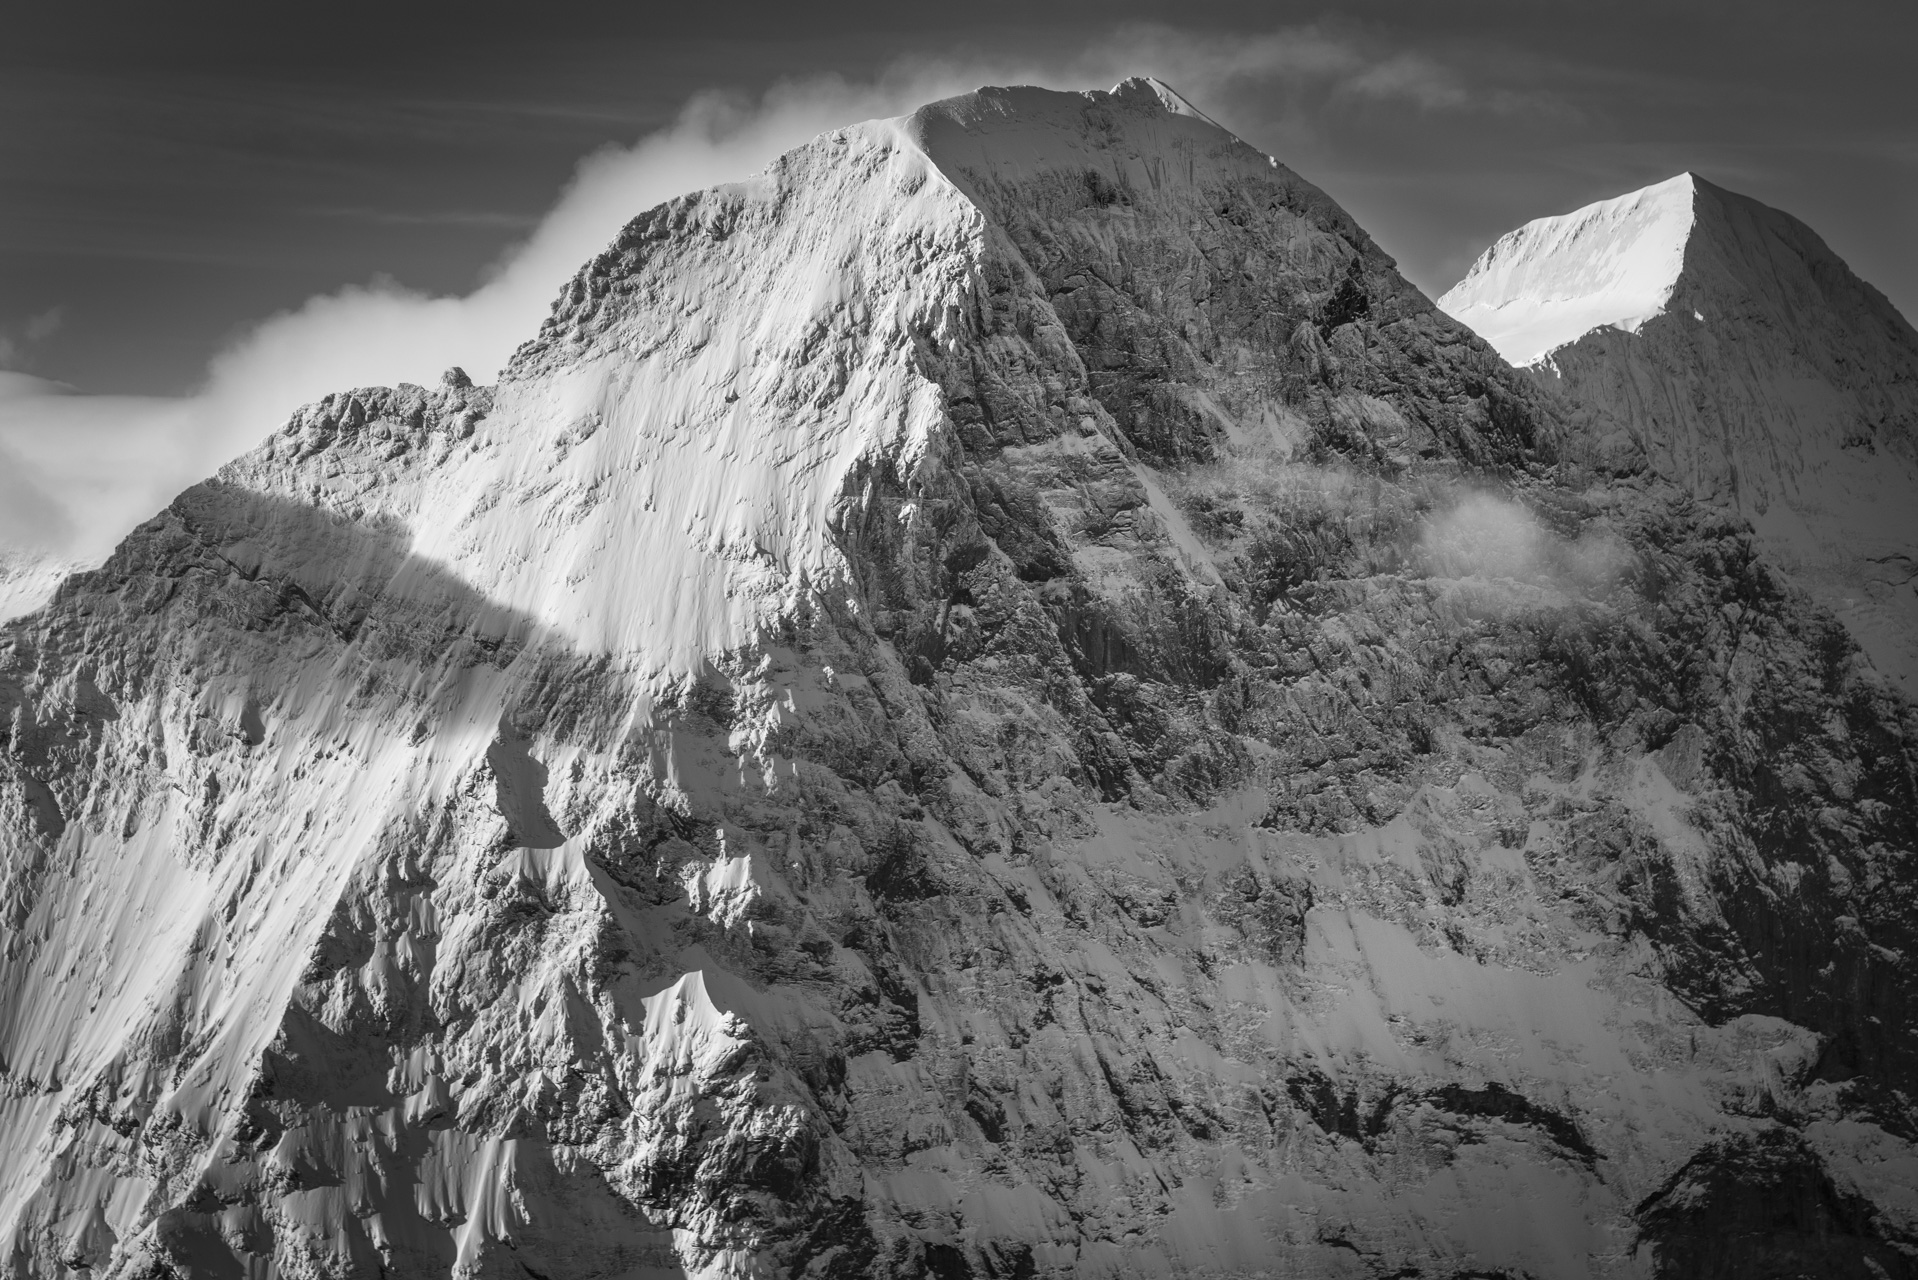 Grindelwald Switzerland - snow mountain photo  of The Eiger - Monch - photo sunrise mountain